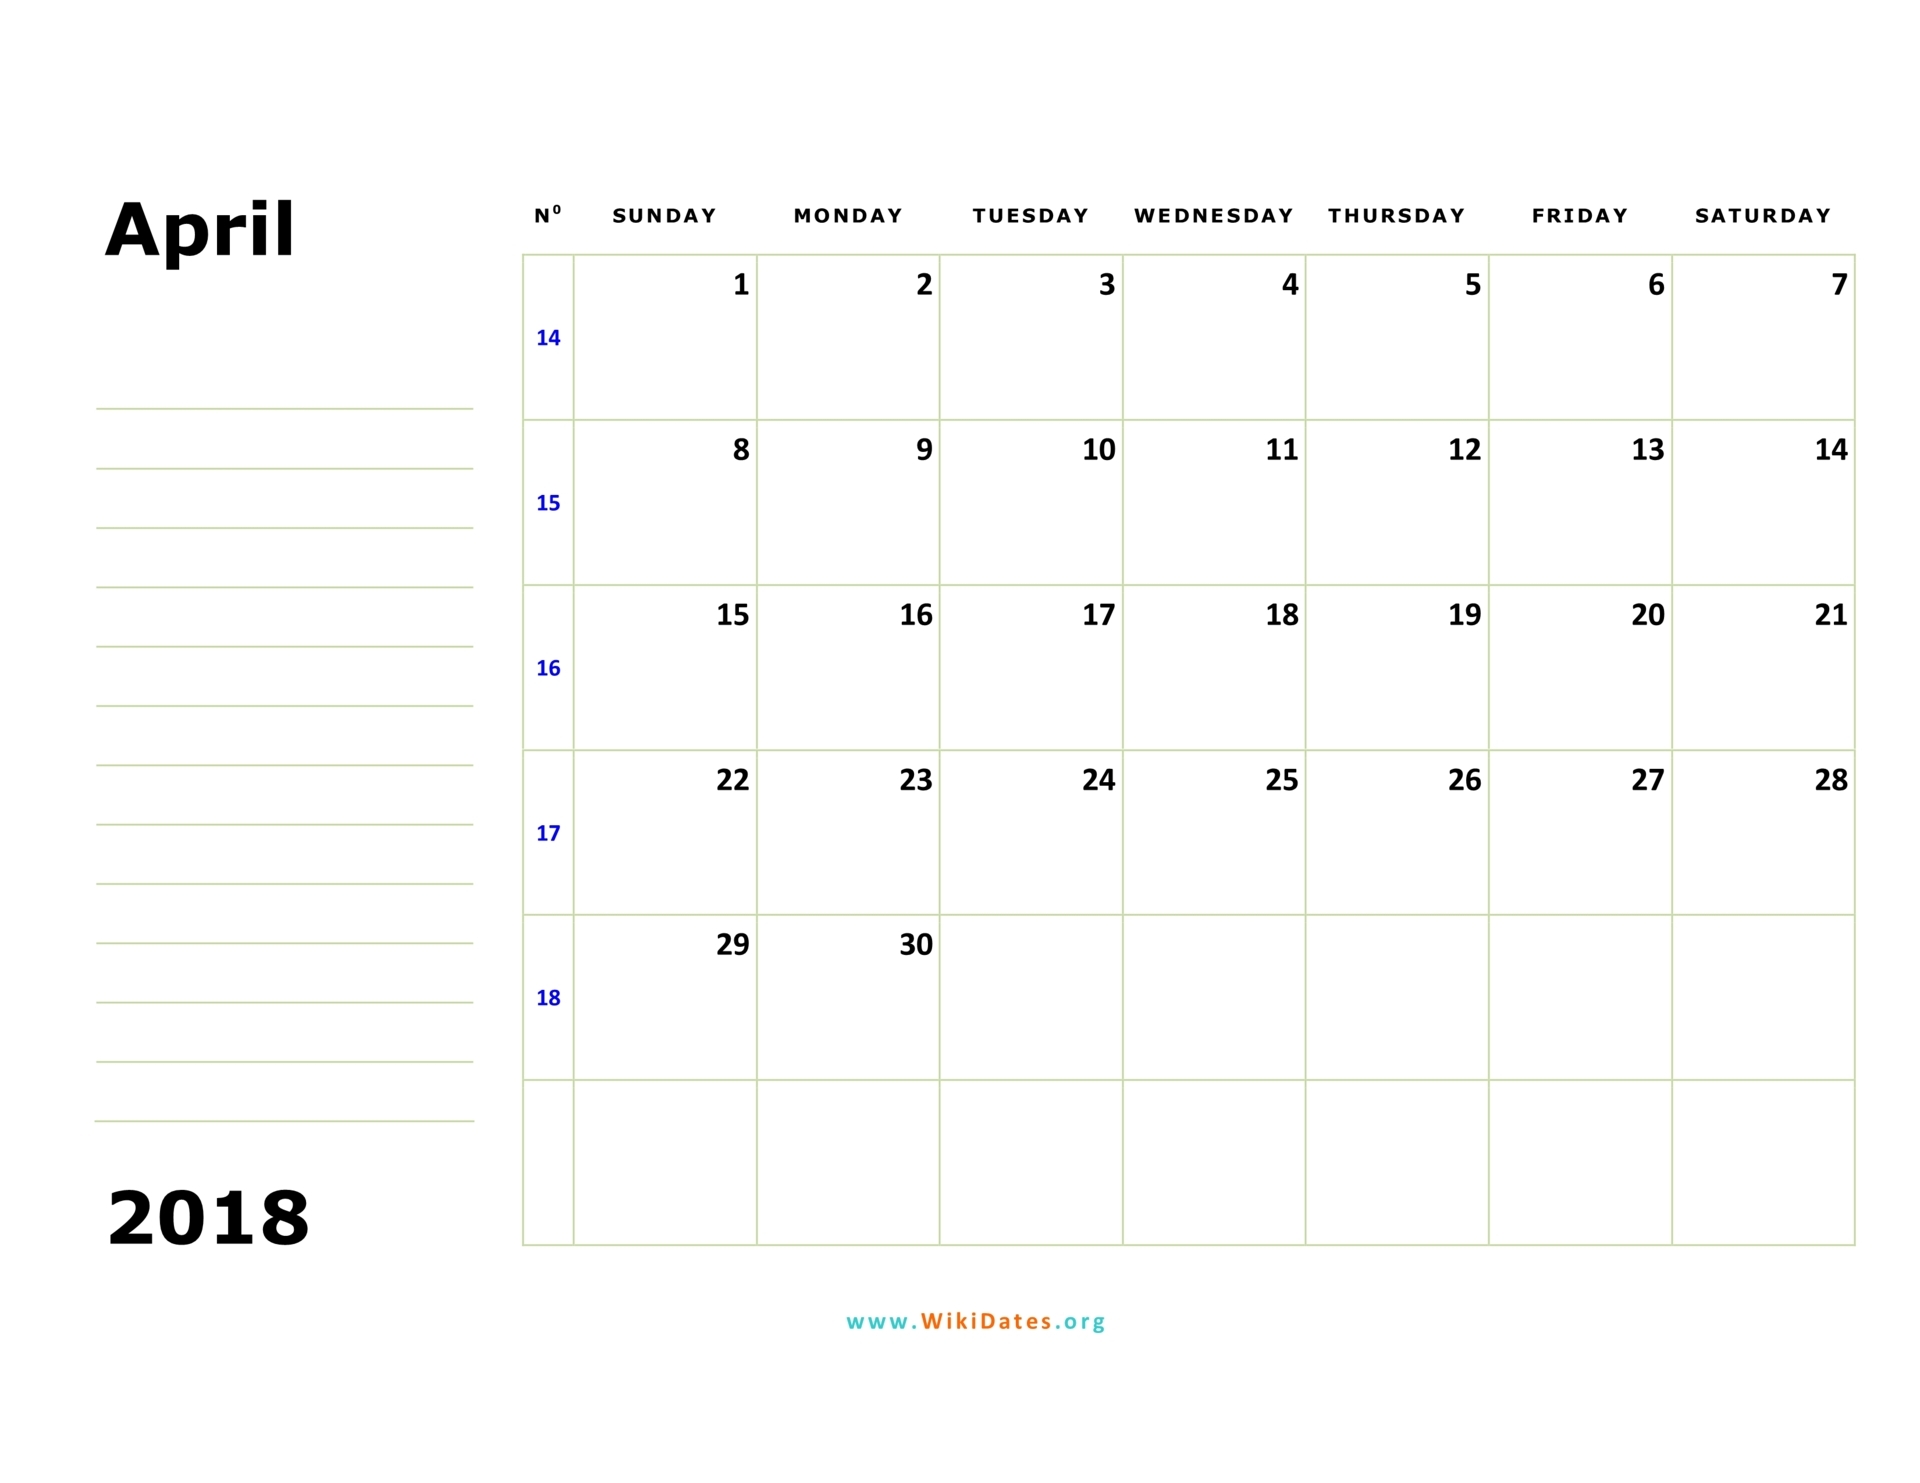 april-2018-calendar-wikidates